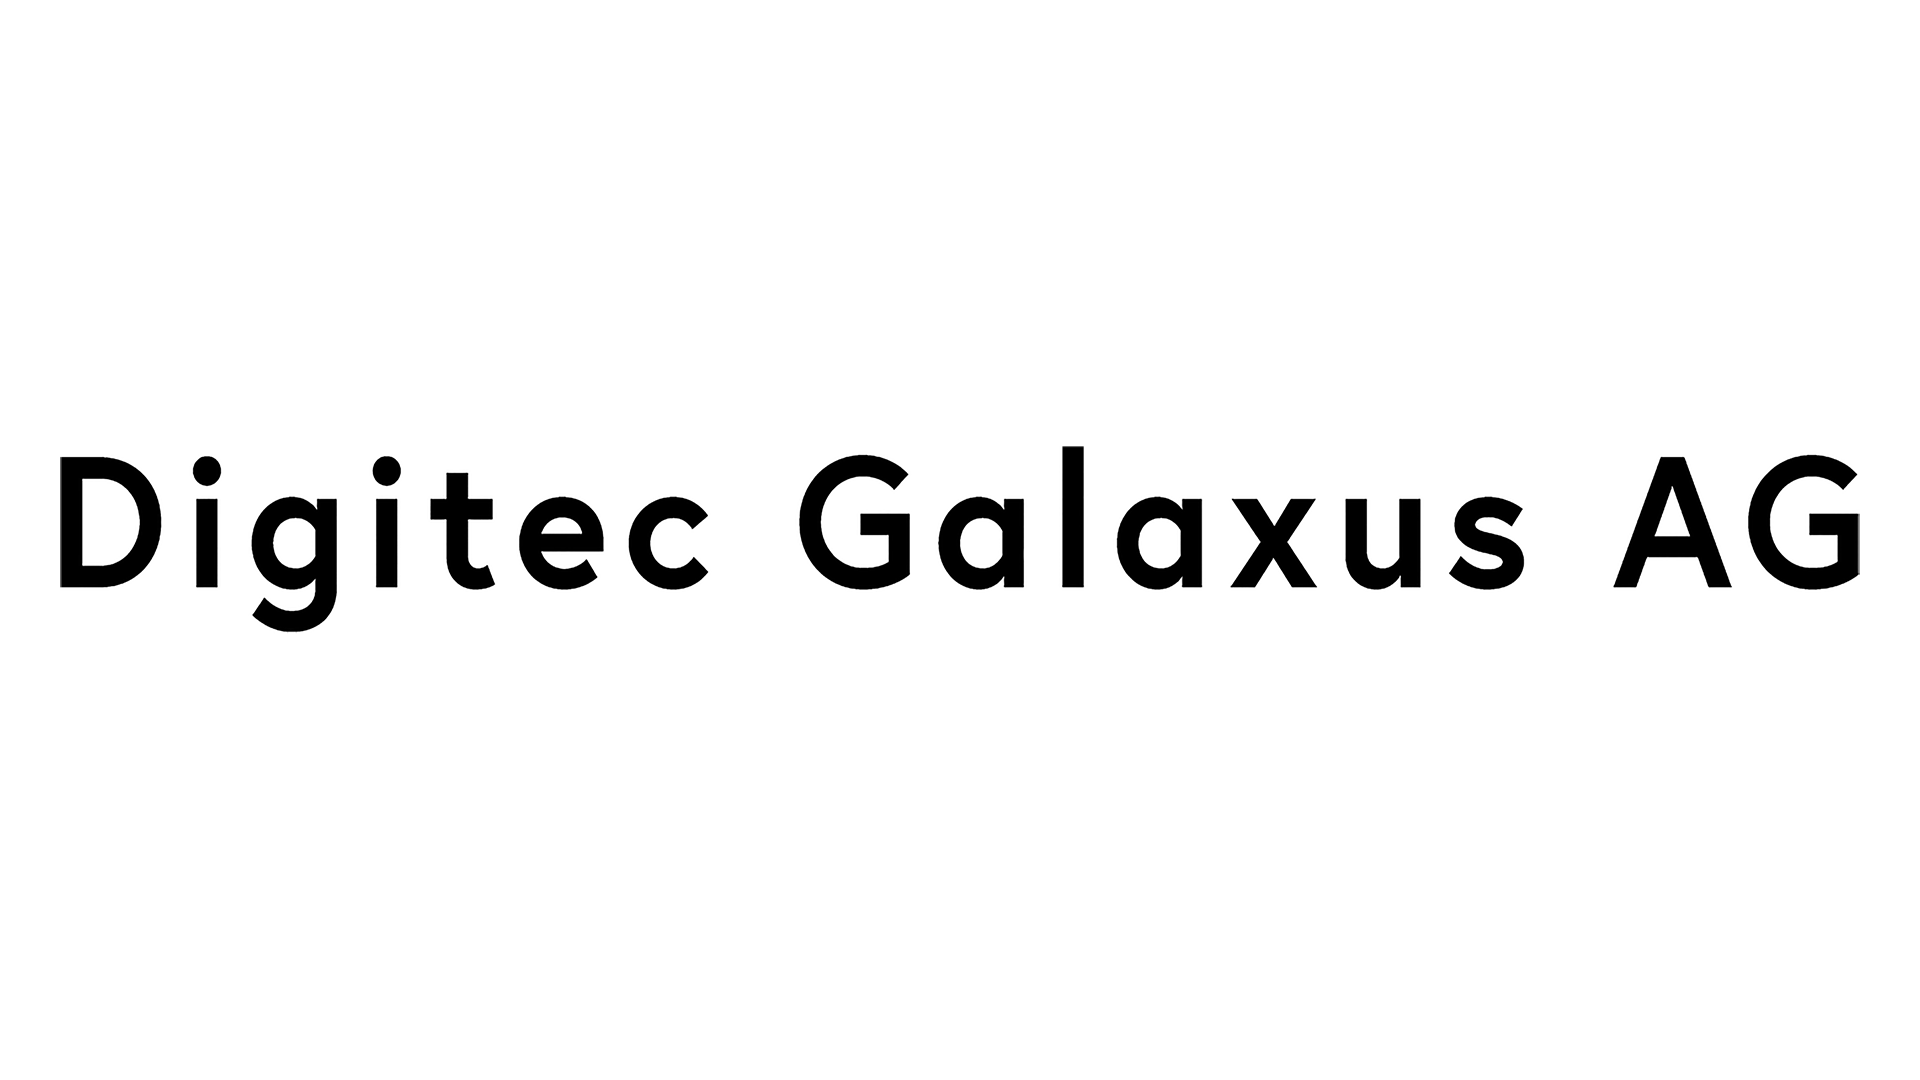 cmt Partner Digitec Glalaxus preferred partner